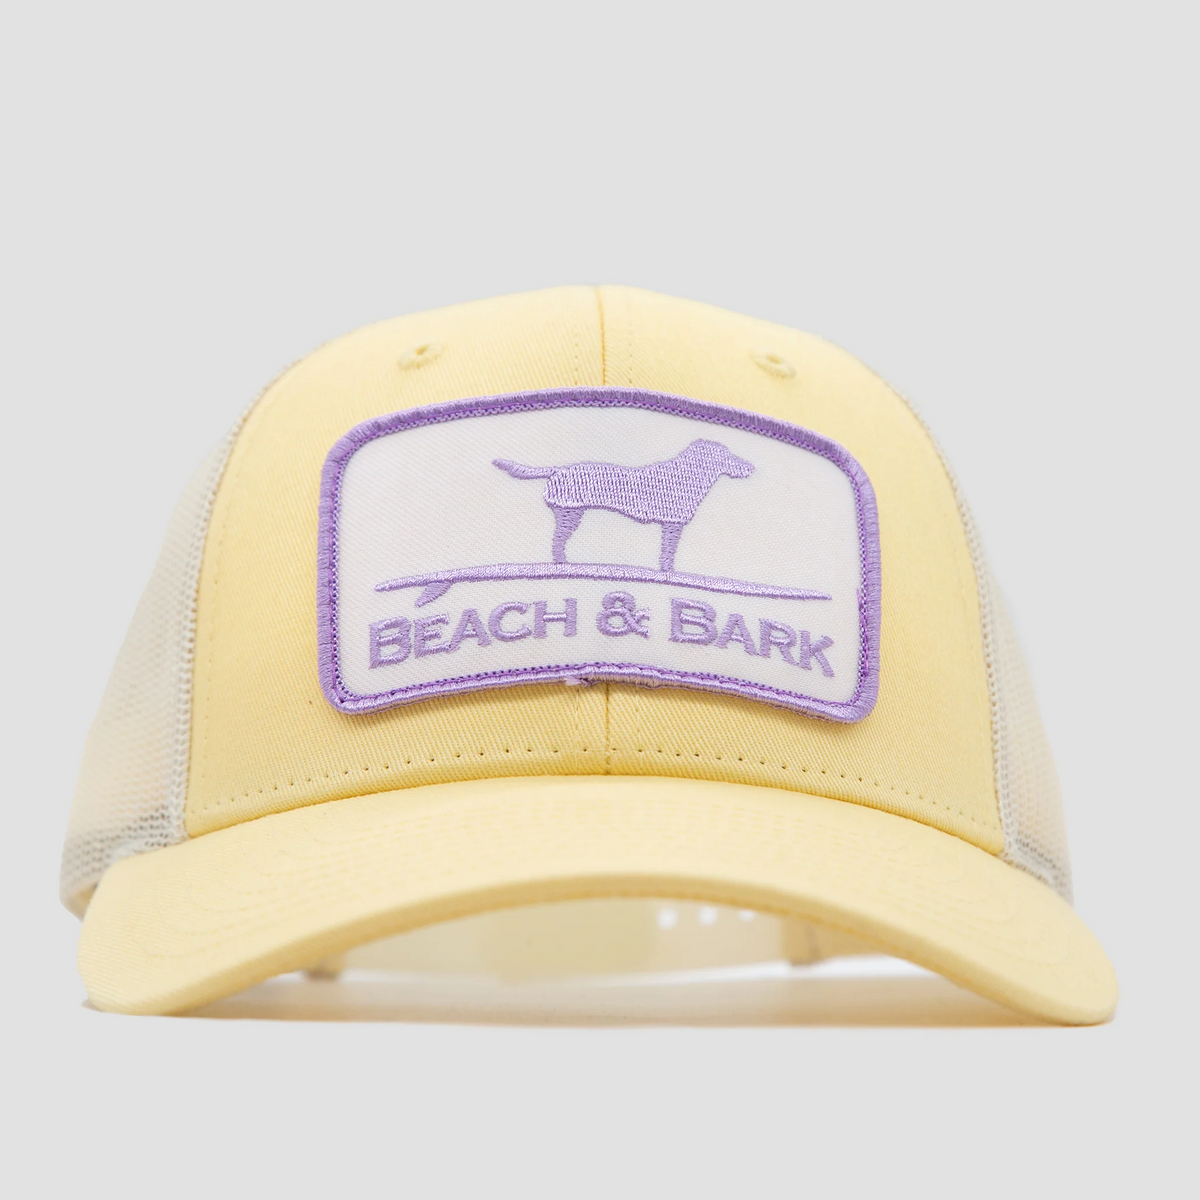 Beach &amp; Bark Medium Snapback Hat